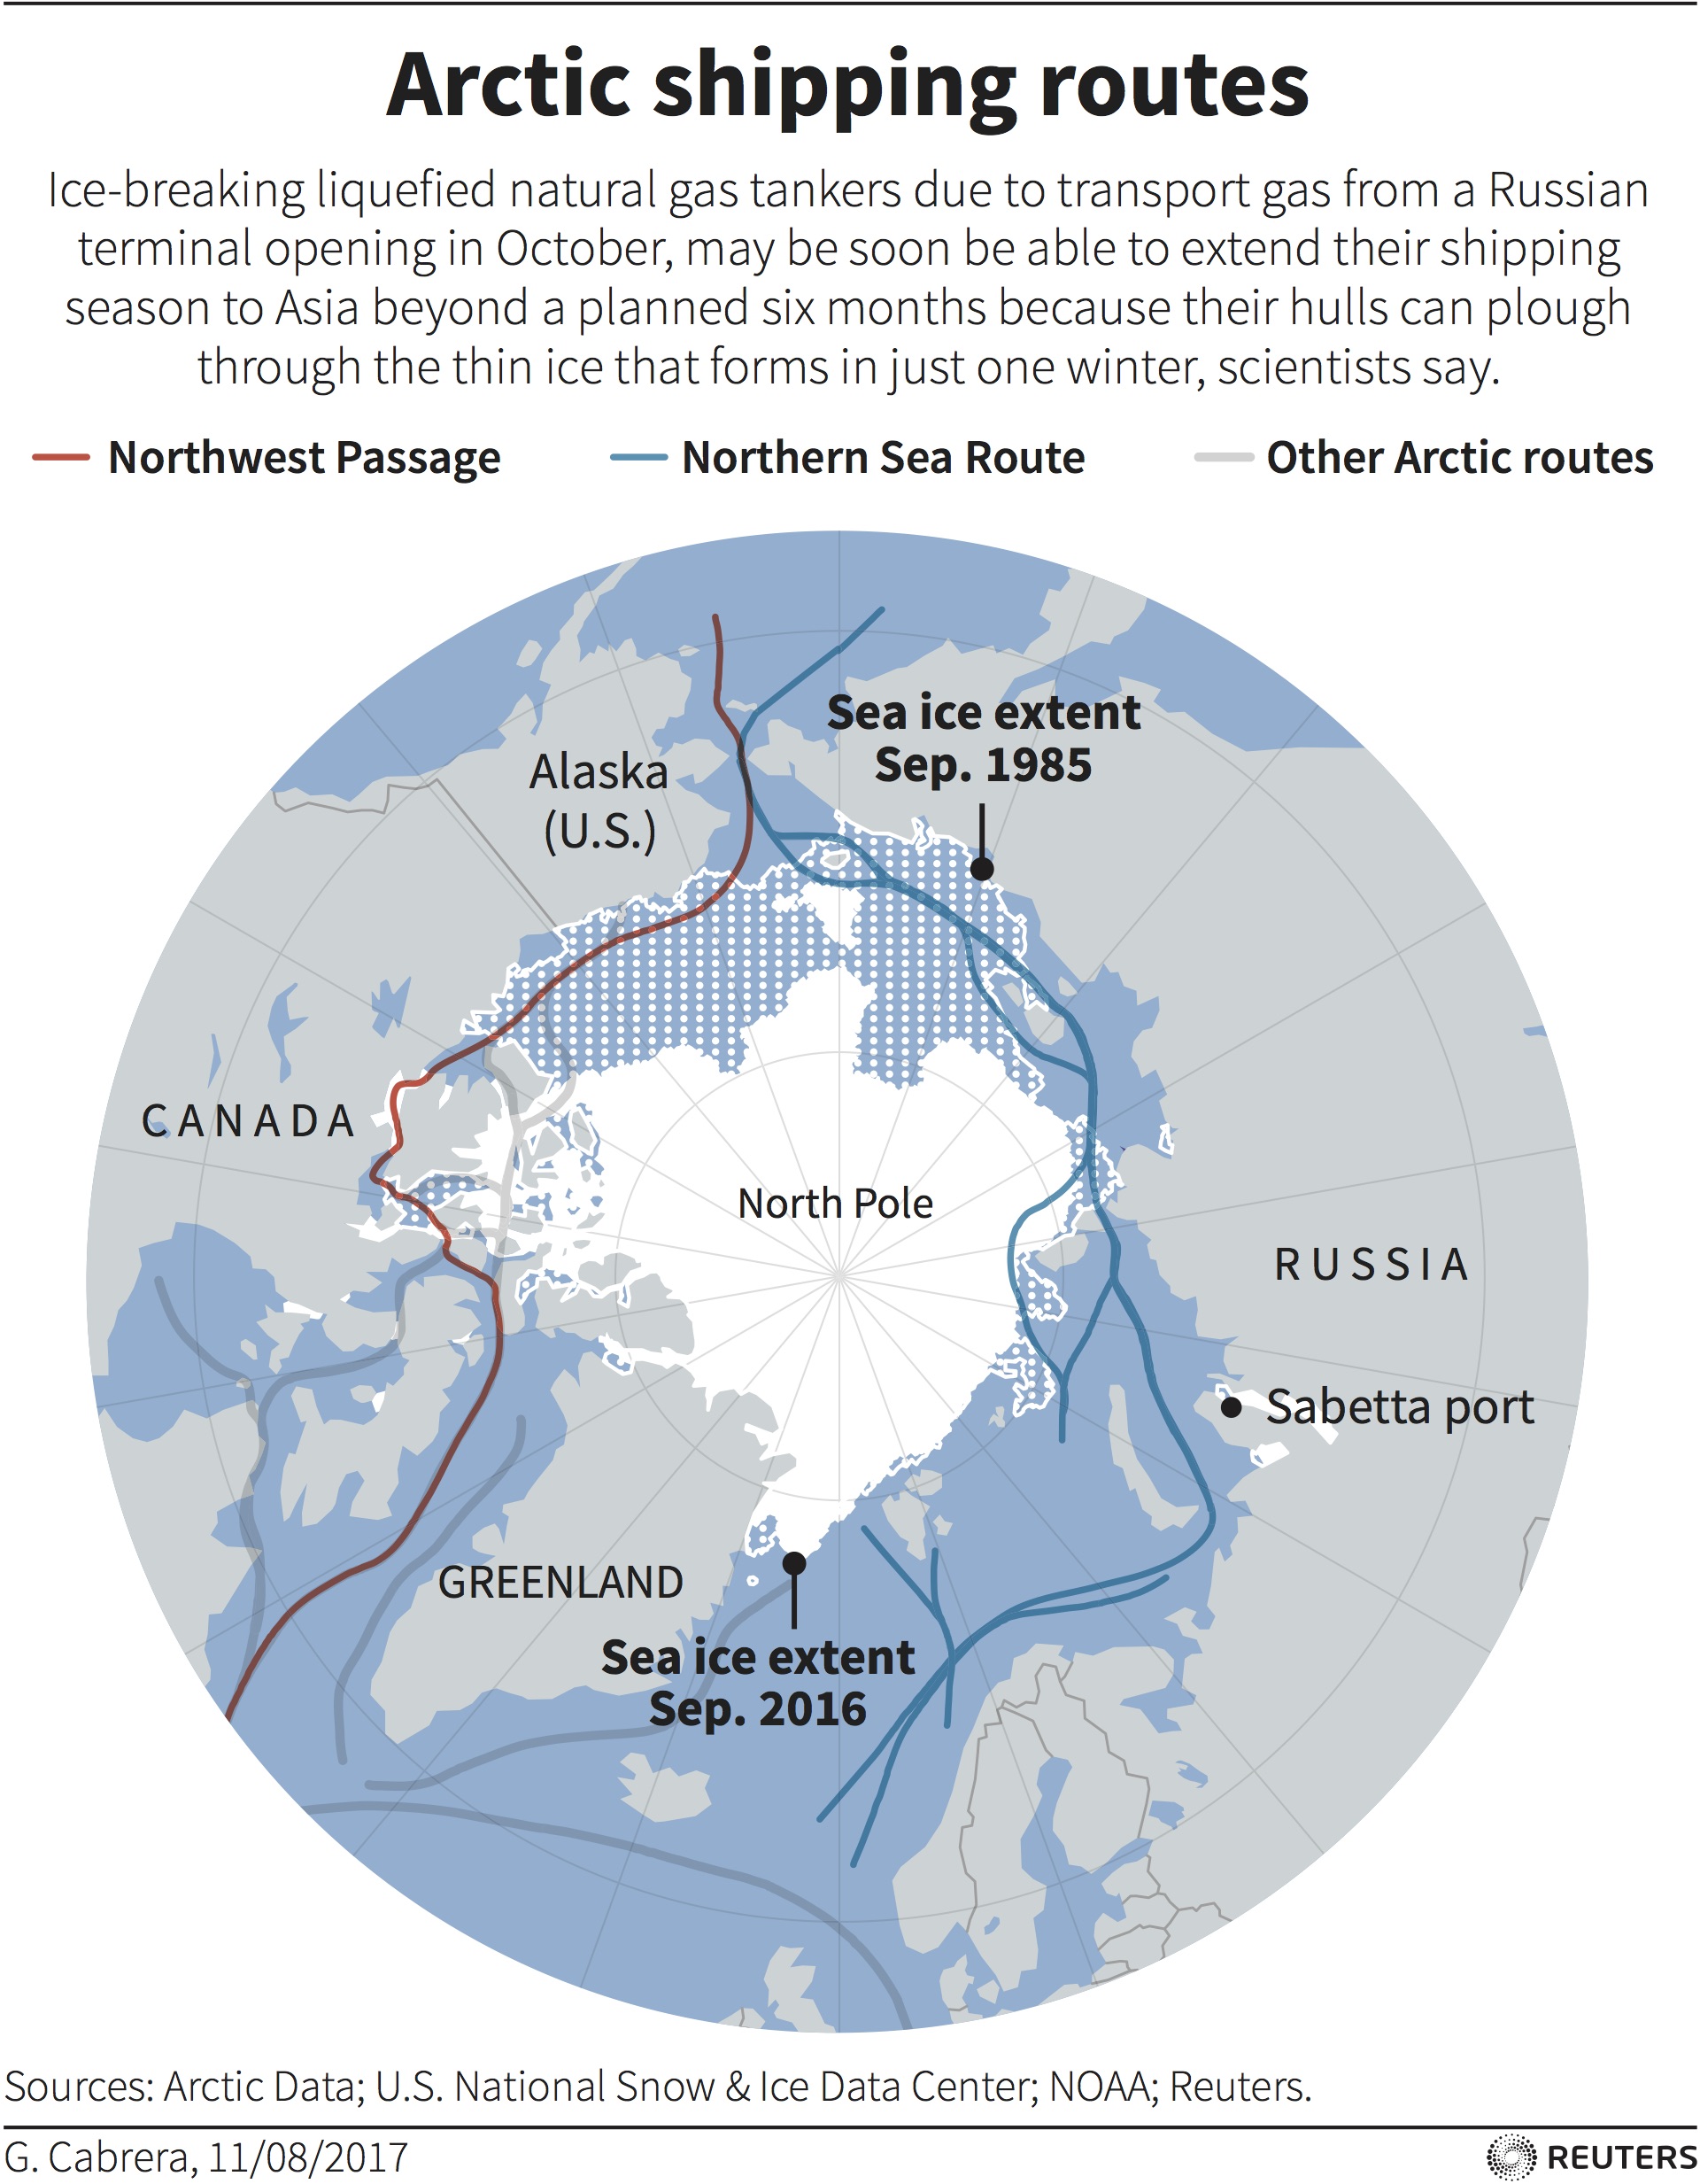 Korean company eyes container shipping along Russia’s Arctic coast